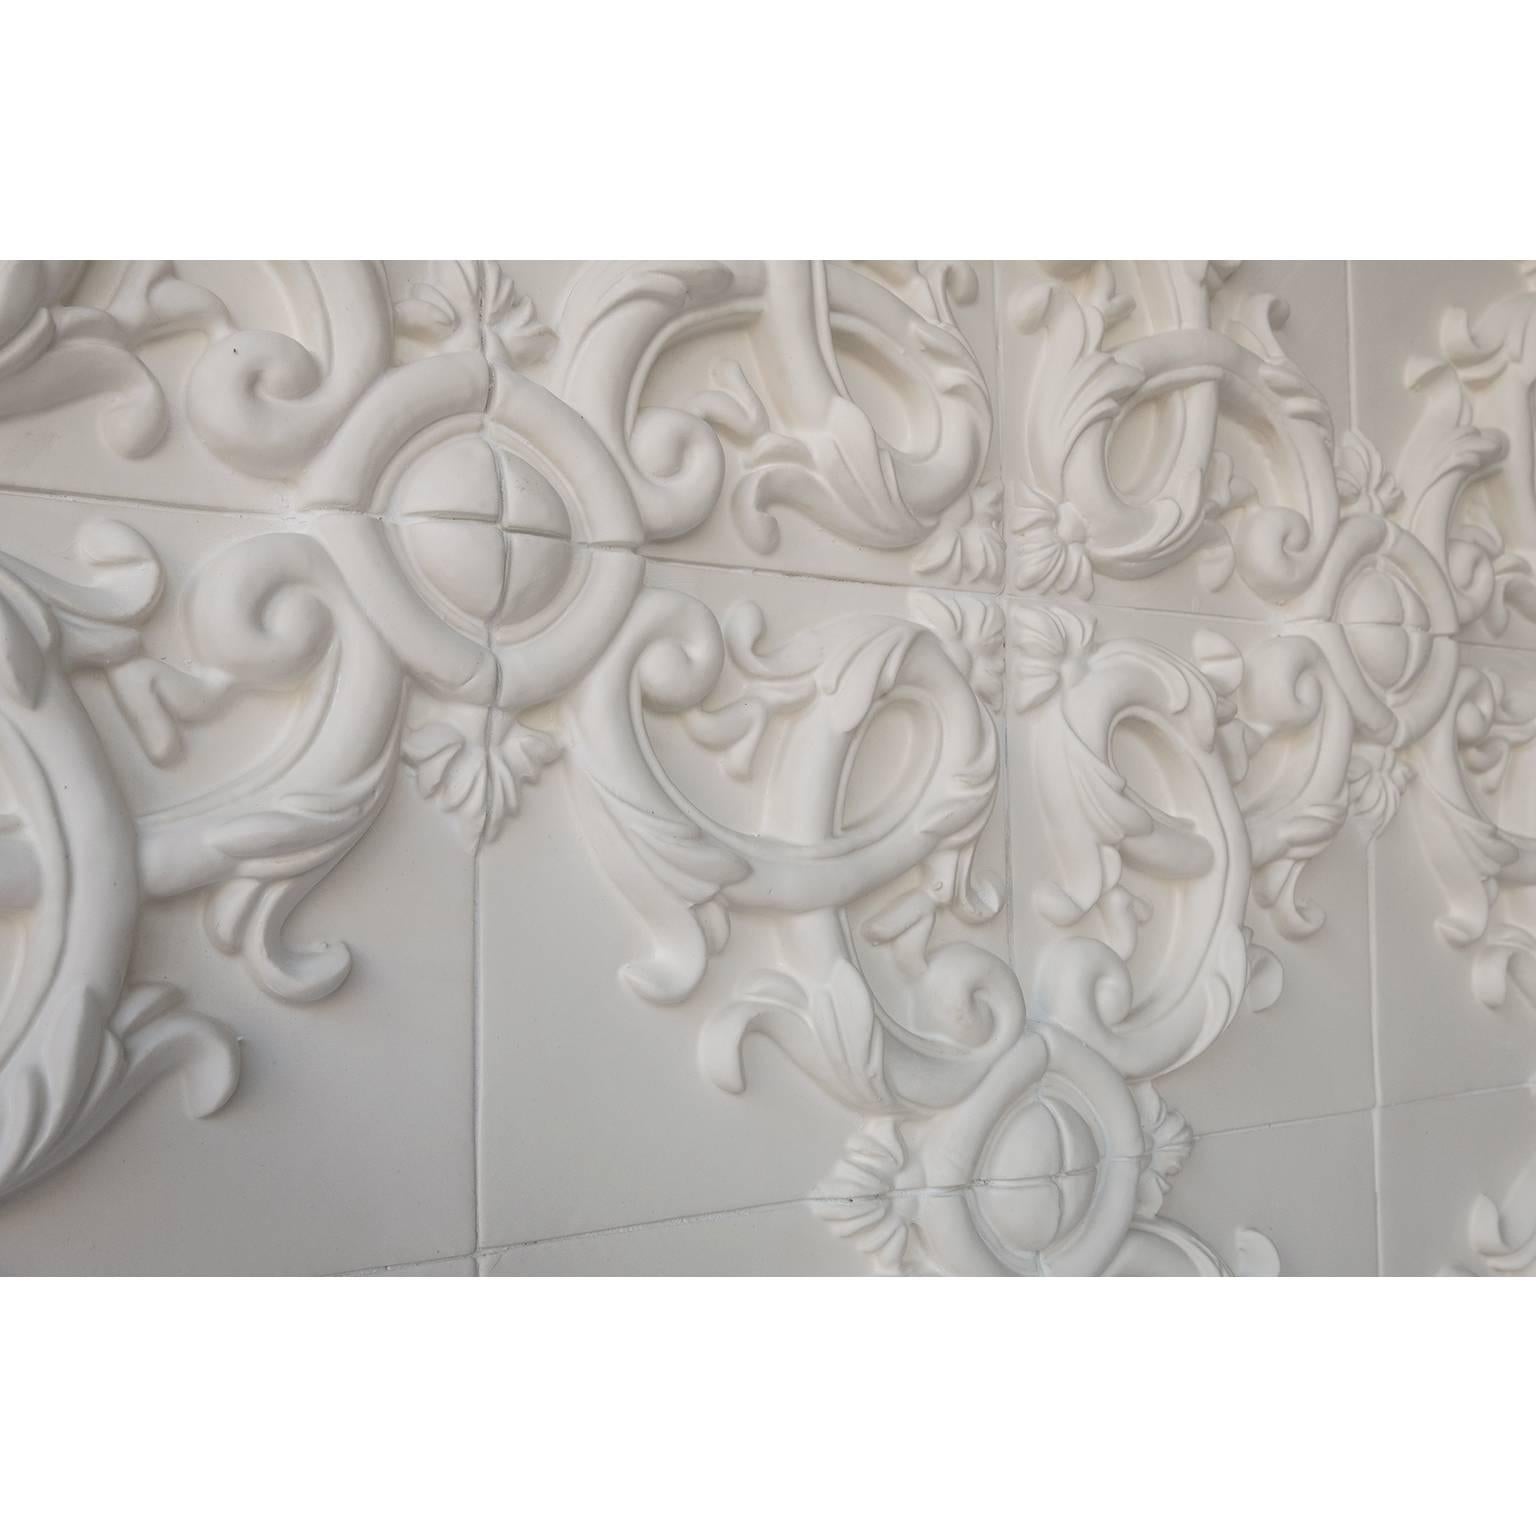 Decorative Panel in Three-Dimensional Baroque Ceramic, Customizable, Acanto In New Condition For Sale In Palermo, IT